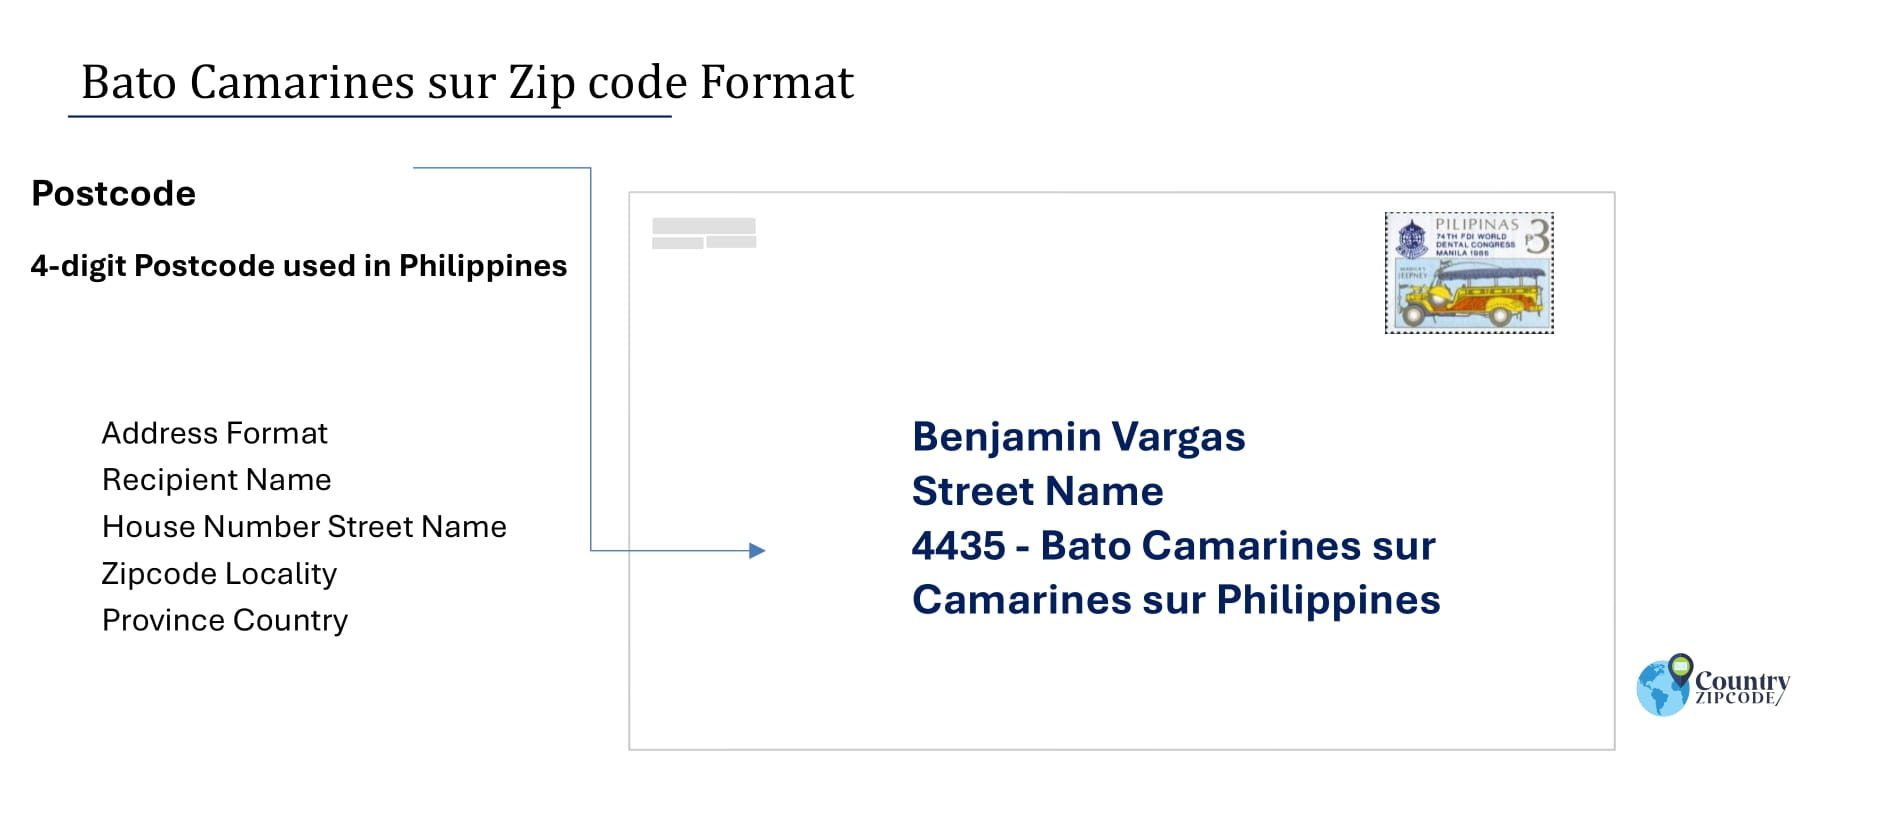 example of Bato Camarines sur Philippines zip code and address format